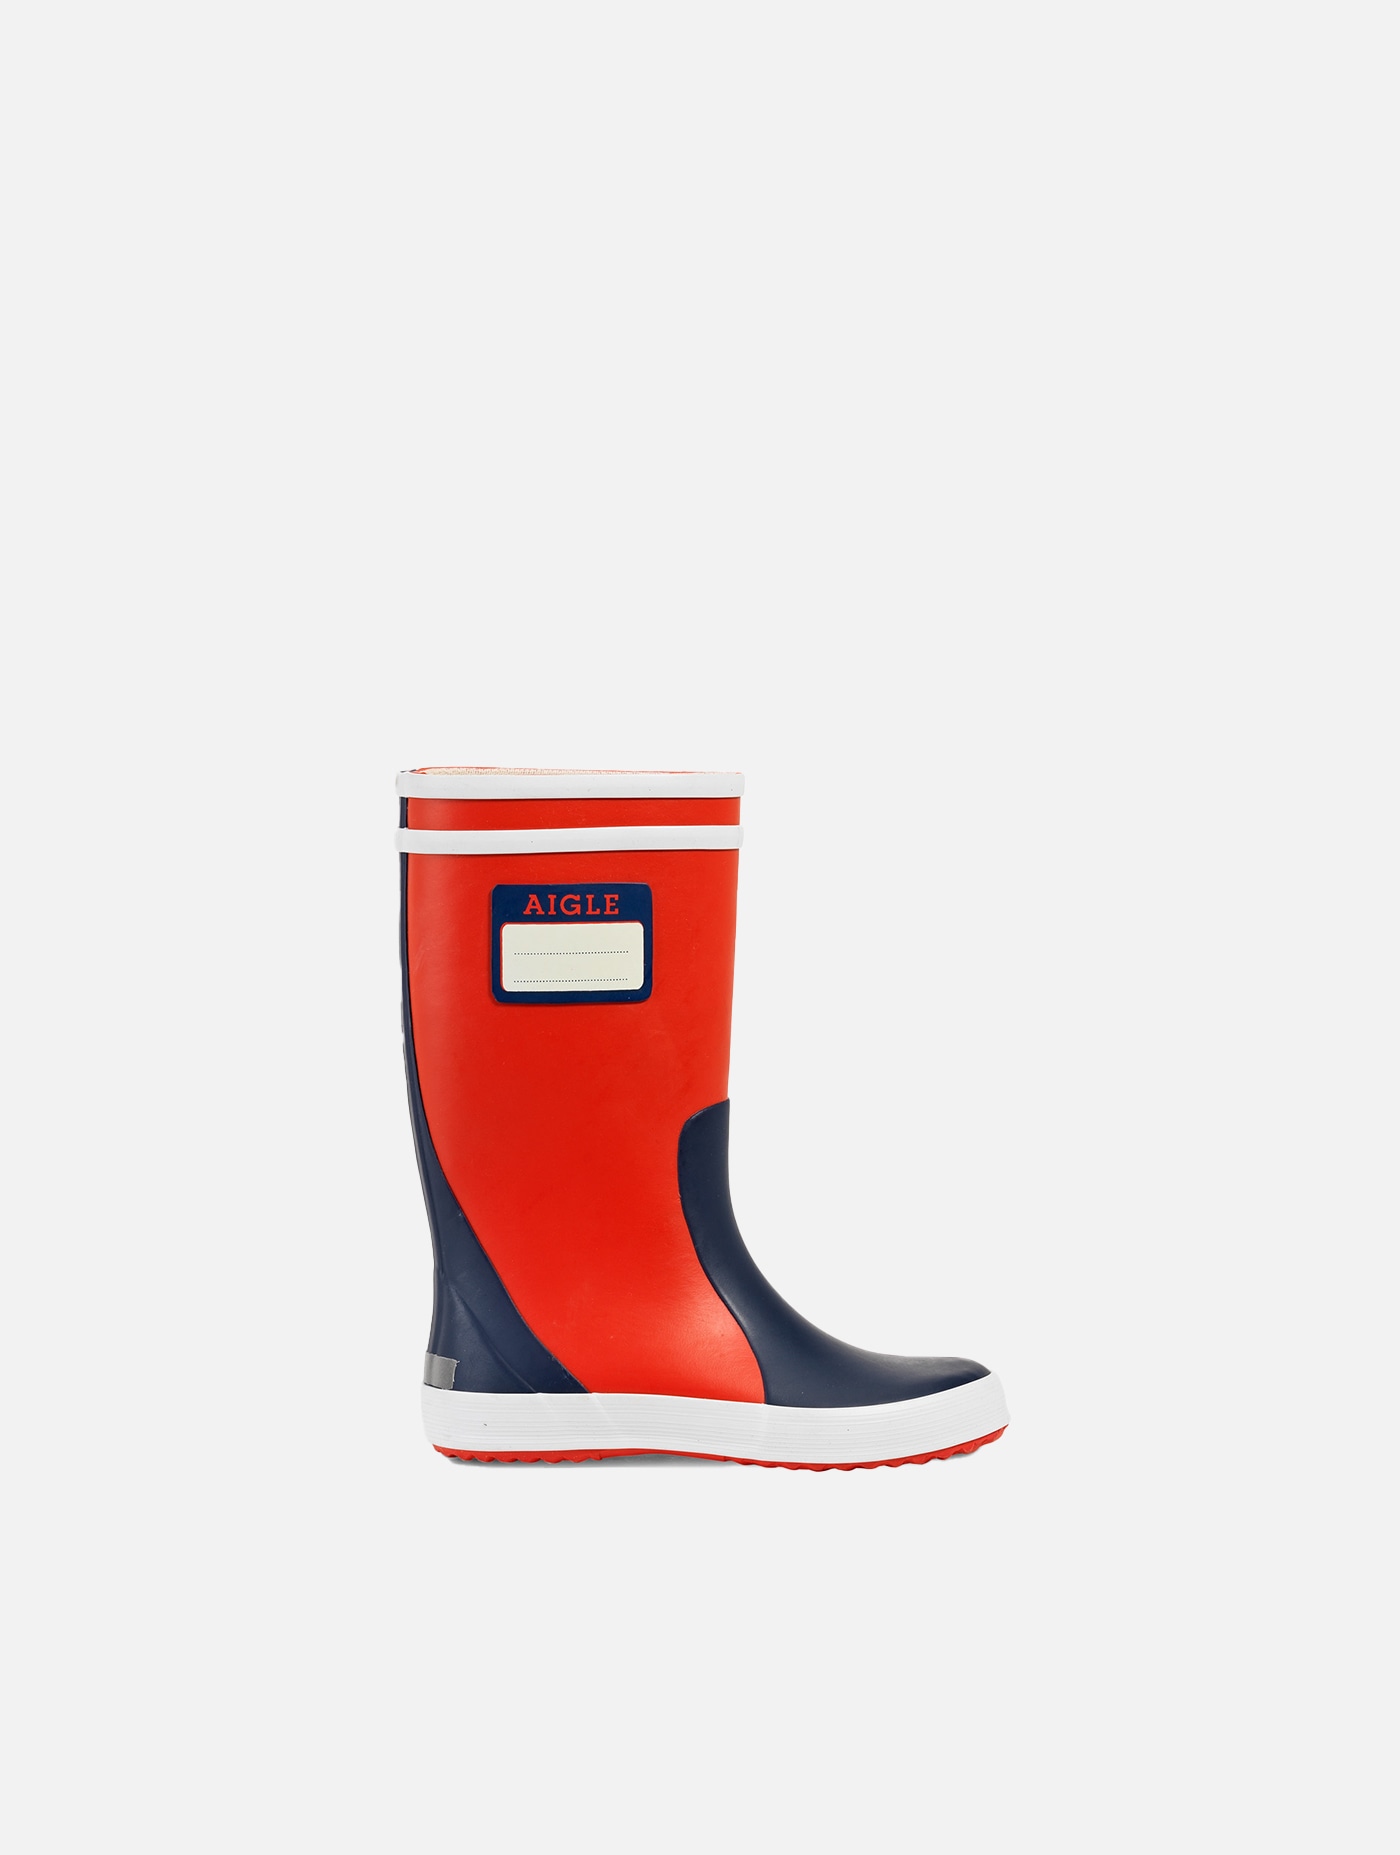 Aigle - iconic children's boot Rouge/indigo/blanc - pop block | AIGLE